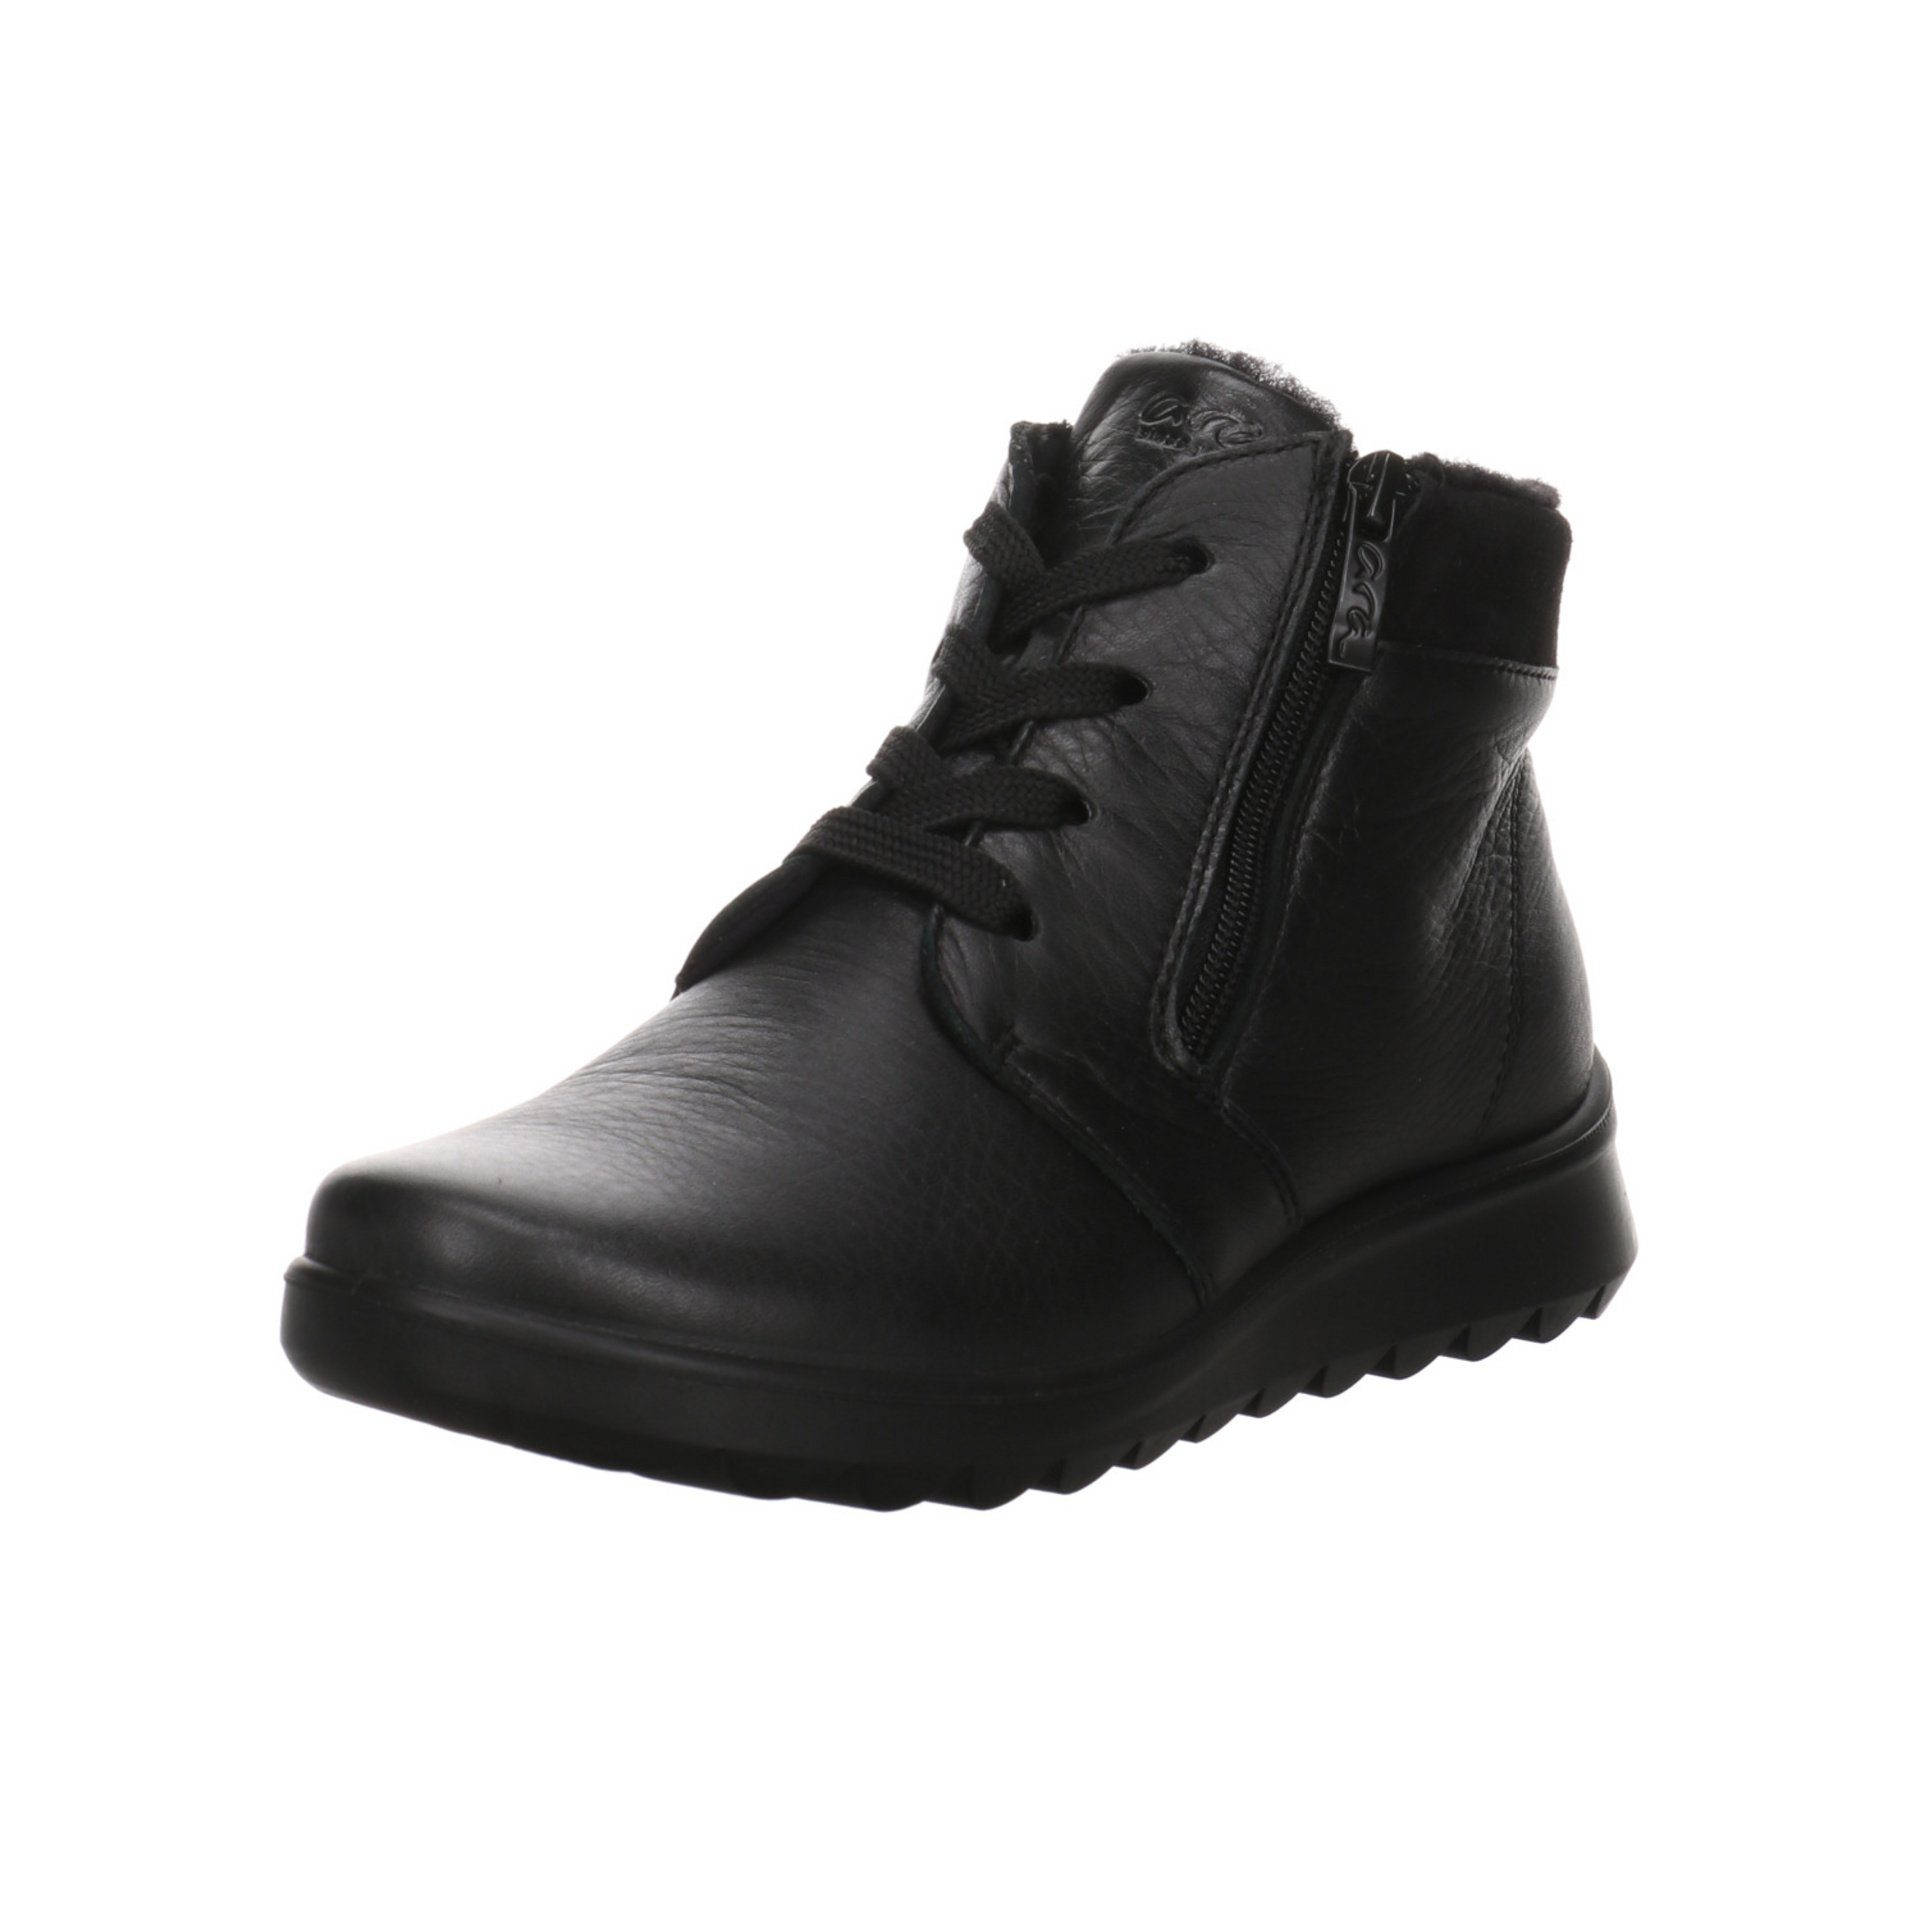 Ara Damen Stiefel Schuhe Toronto Stiefelette 046874 Boots schwarz Lederkombination